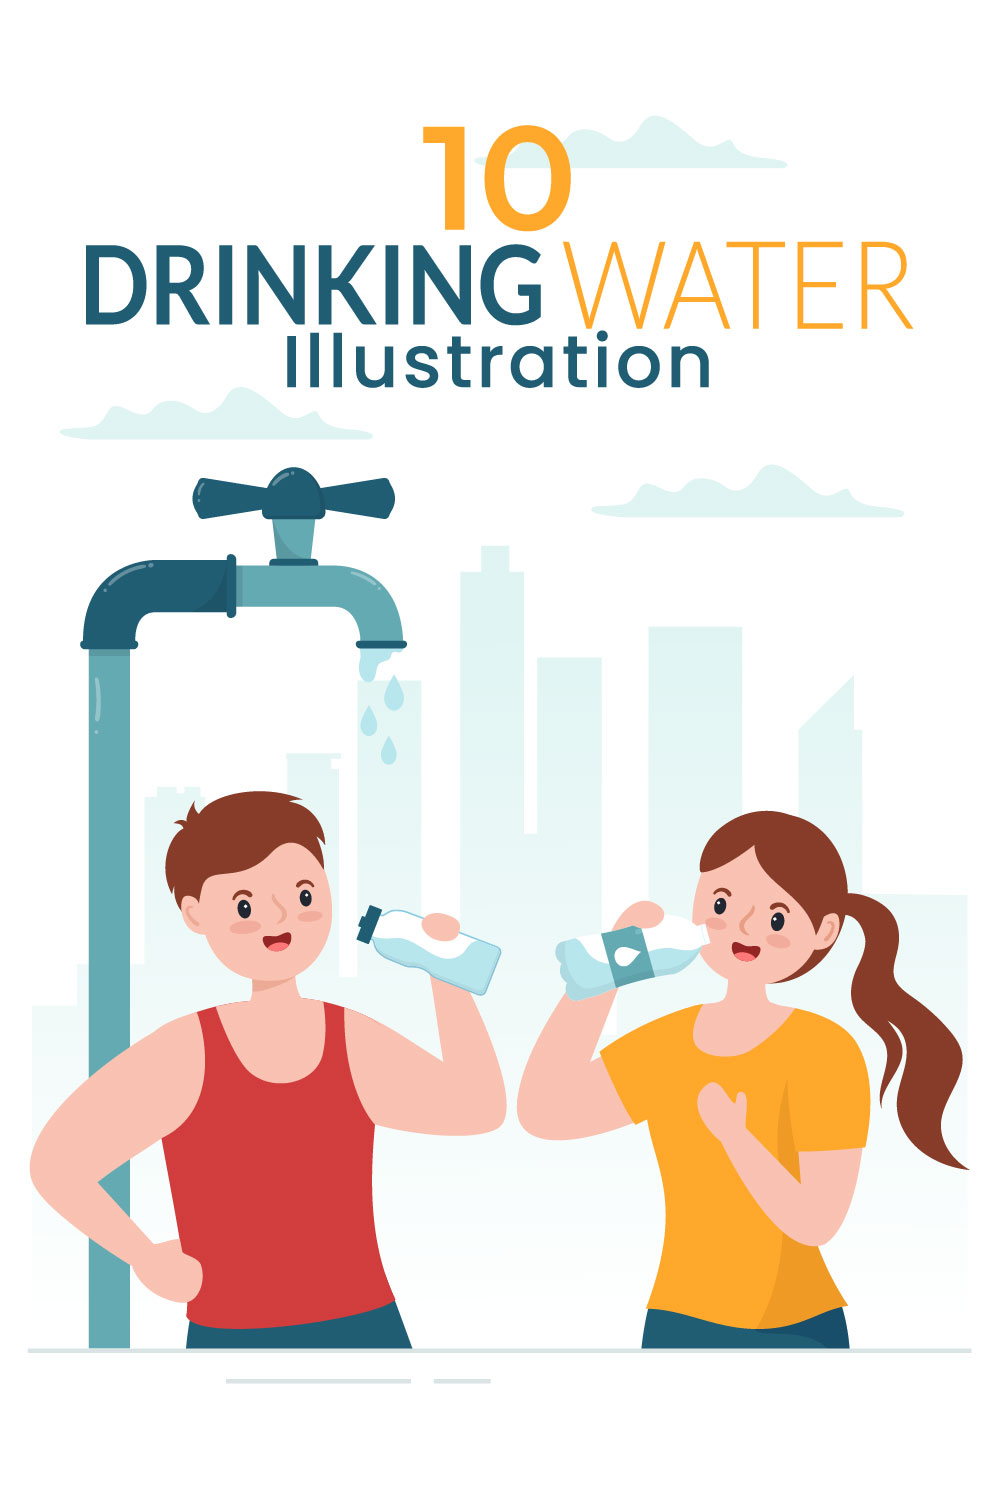 People Drinking Water Design Illustration pinterest image.